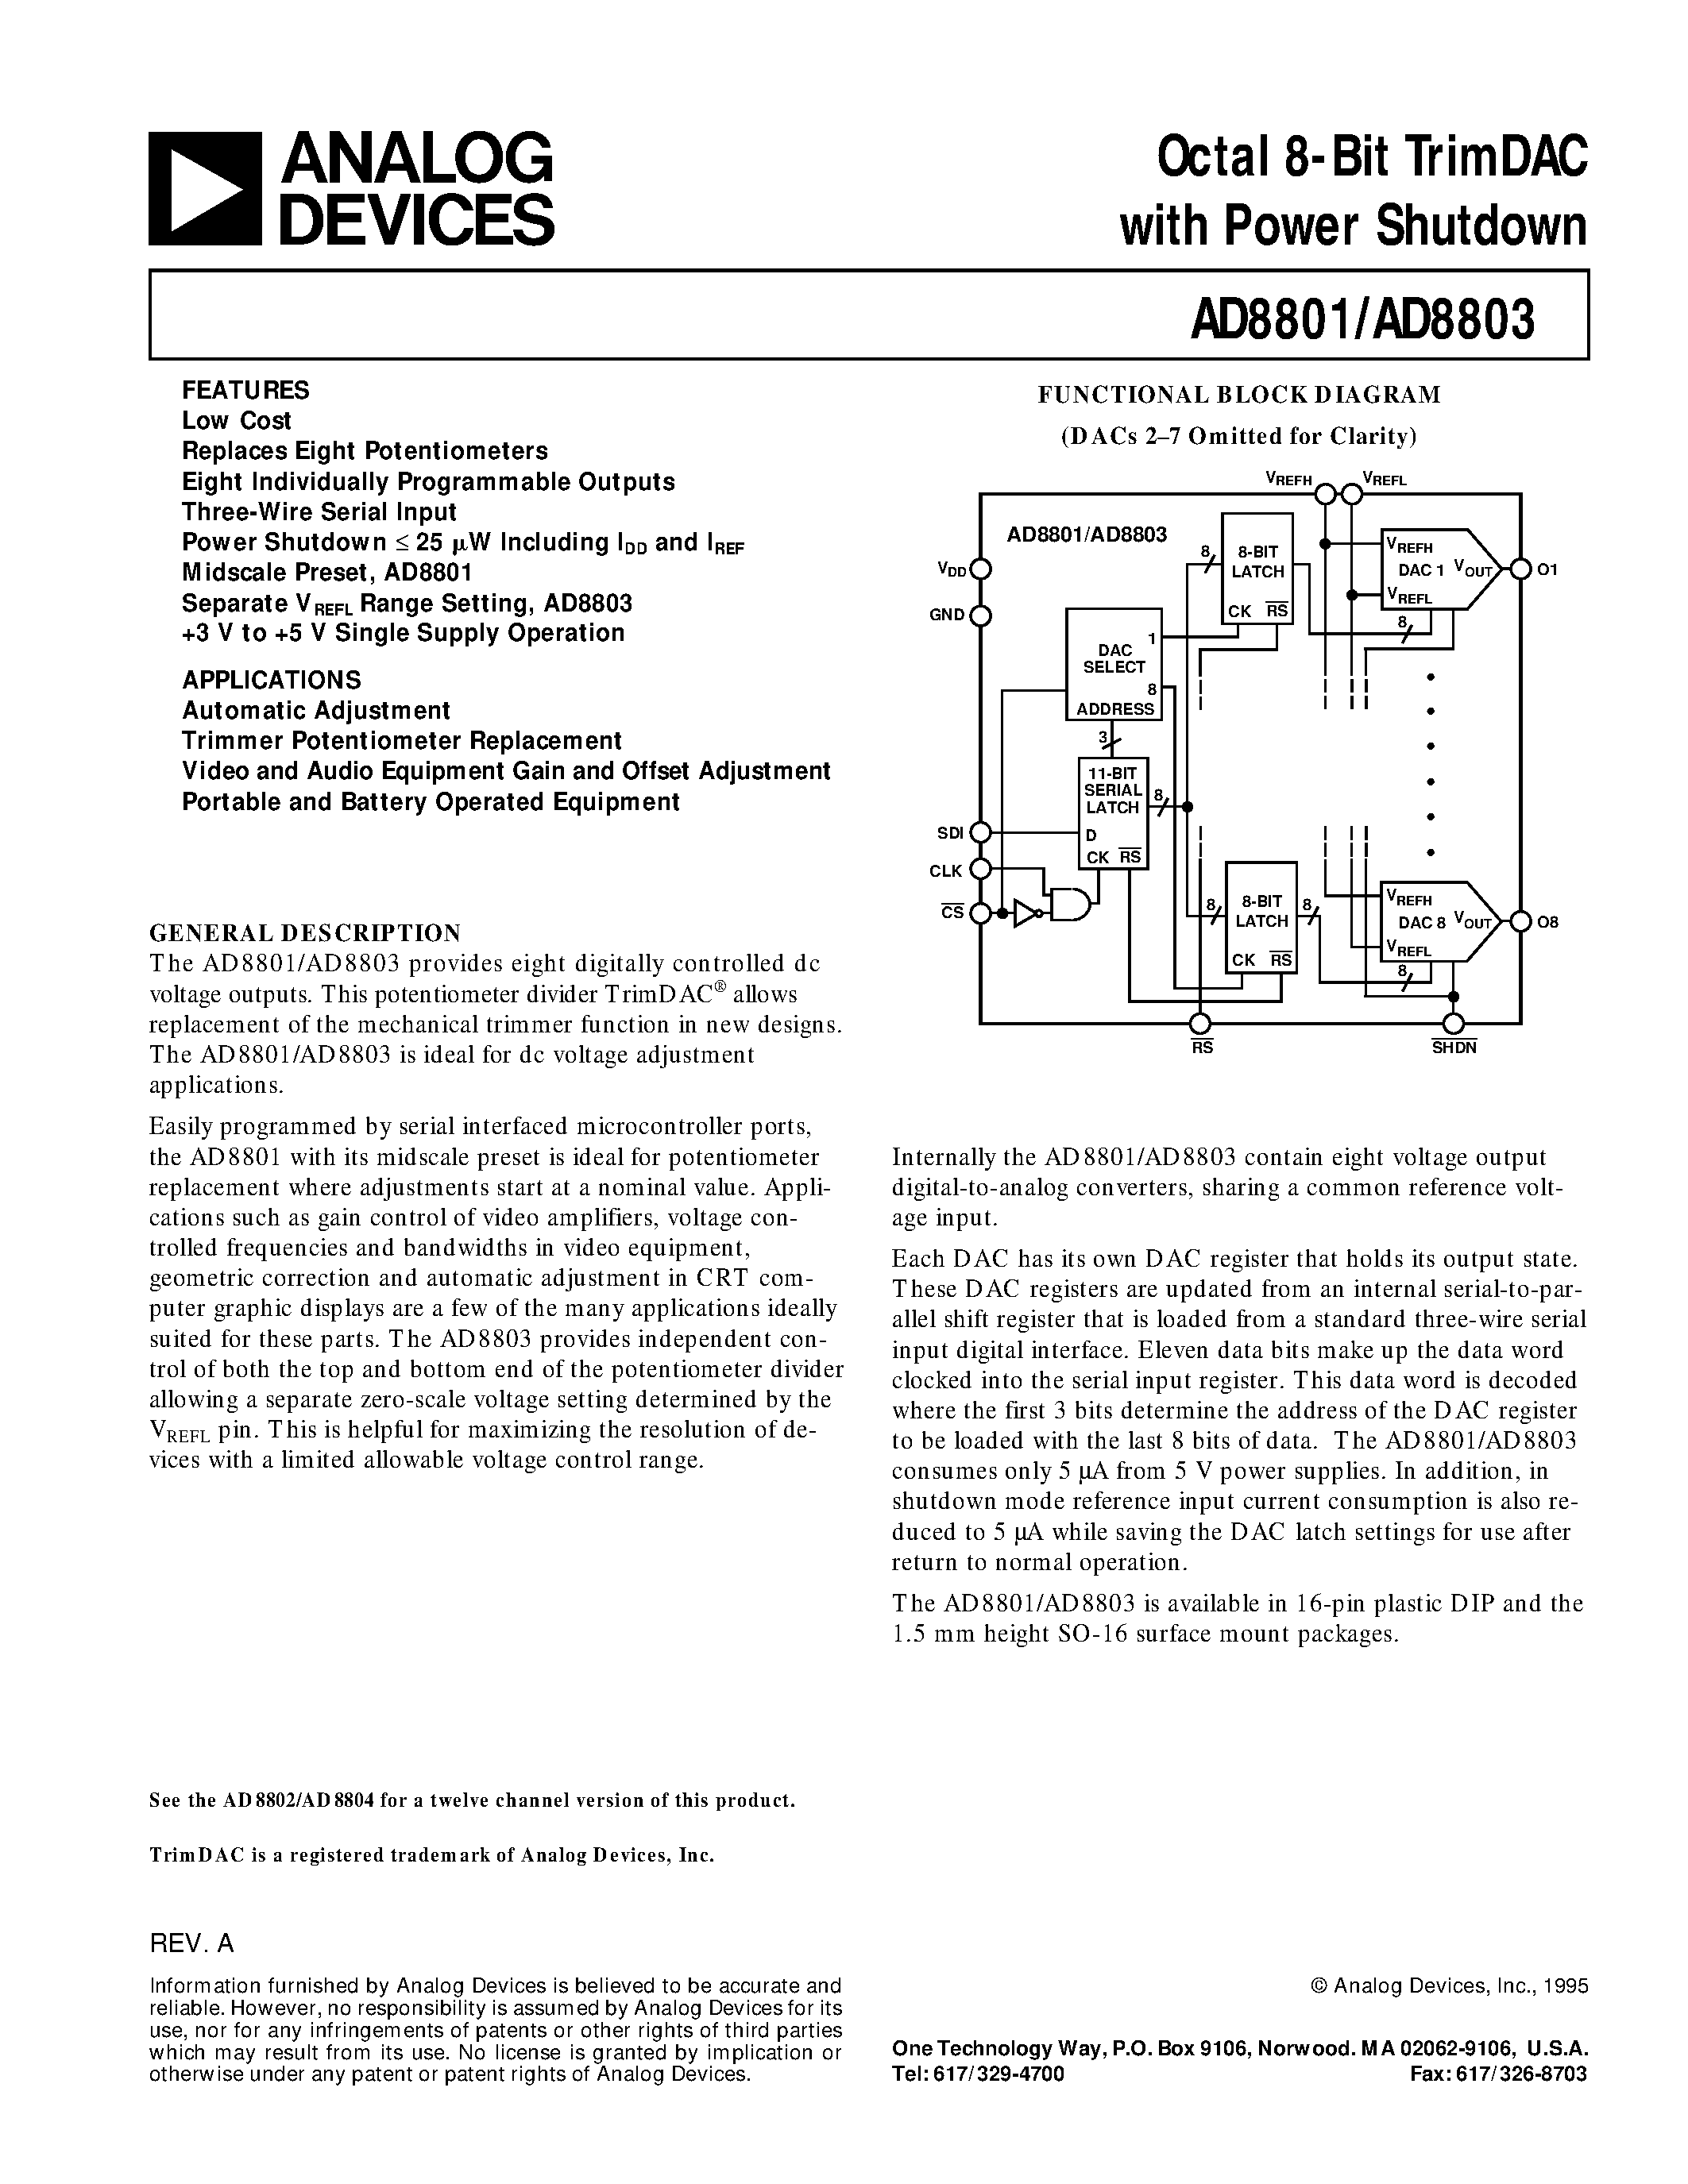 Даташит AD8801AN - Octal 8-Bit TrimDAC with Power Shutdown страница 1